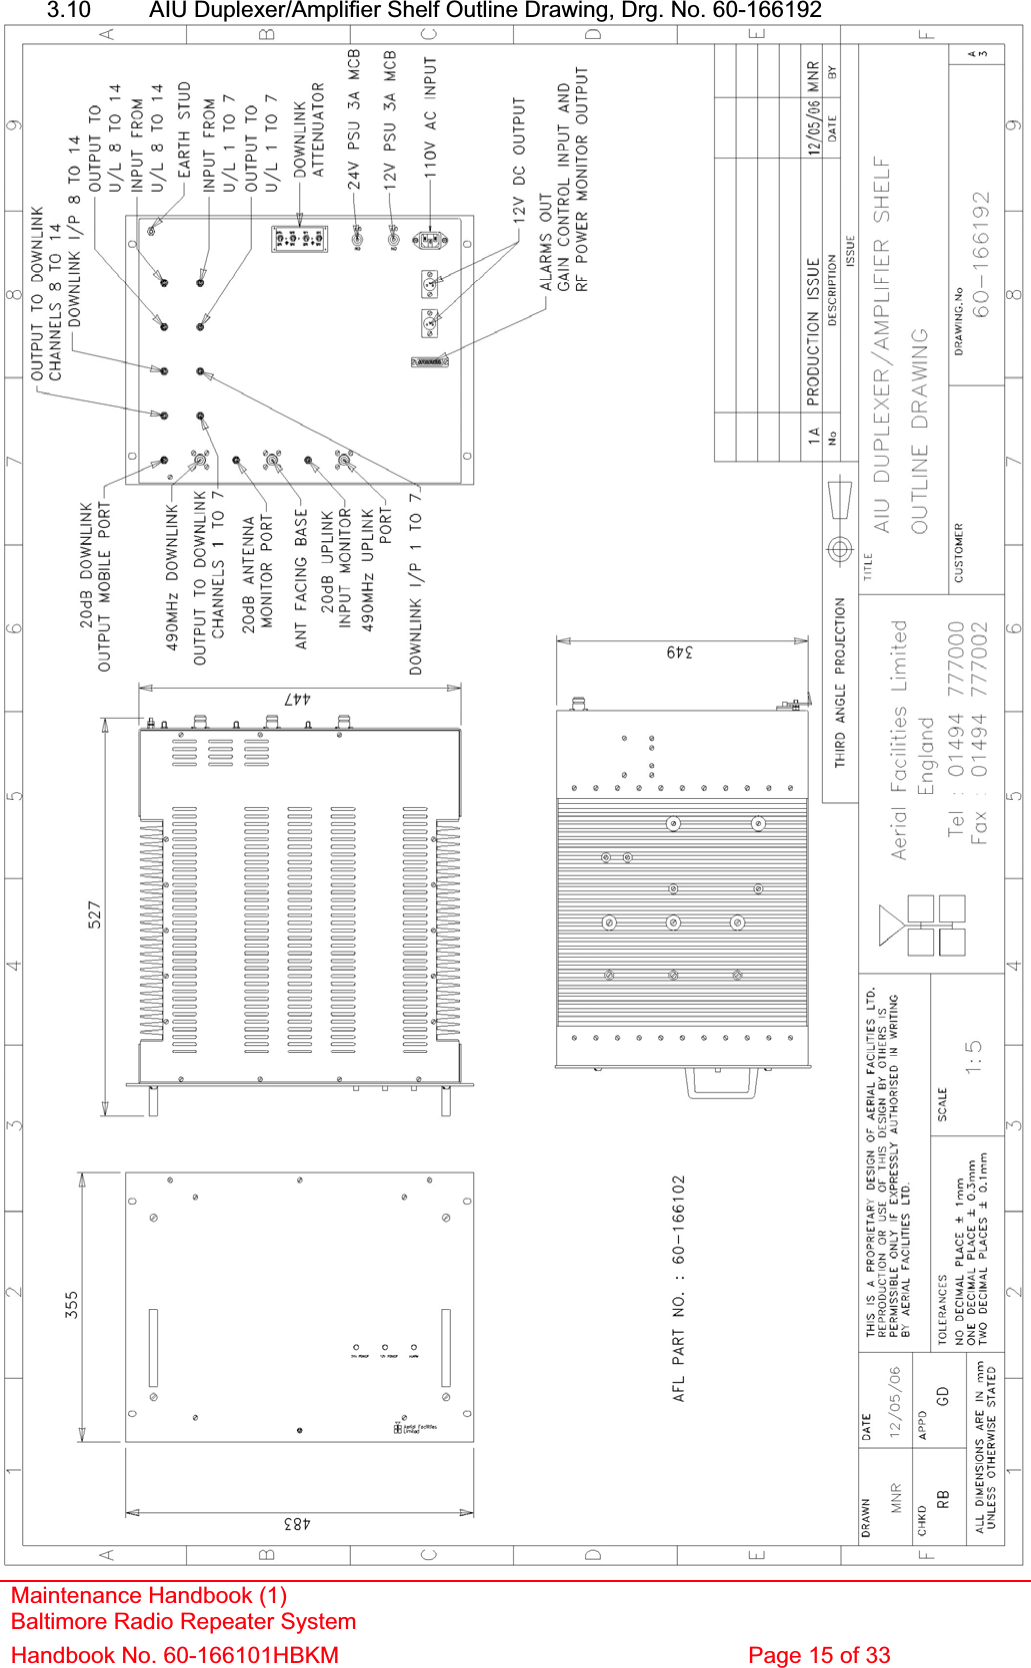 3.10  AIU Duplexer/Amplifier Shelf Outline Drawing, Drg. No. 60-166192 Maintenance Handbook (1) Baltimore Radio Repeater System Handbook No. 60-166101HBKM  Page 15 of 33 